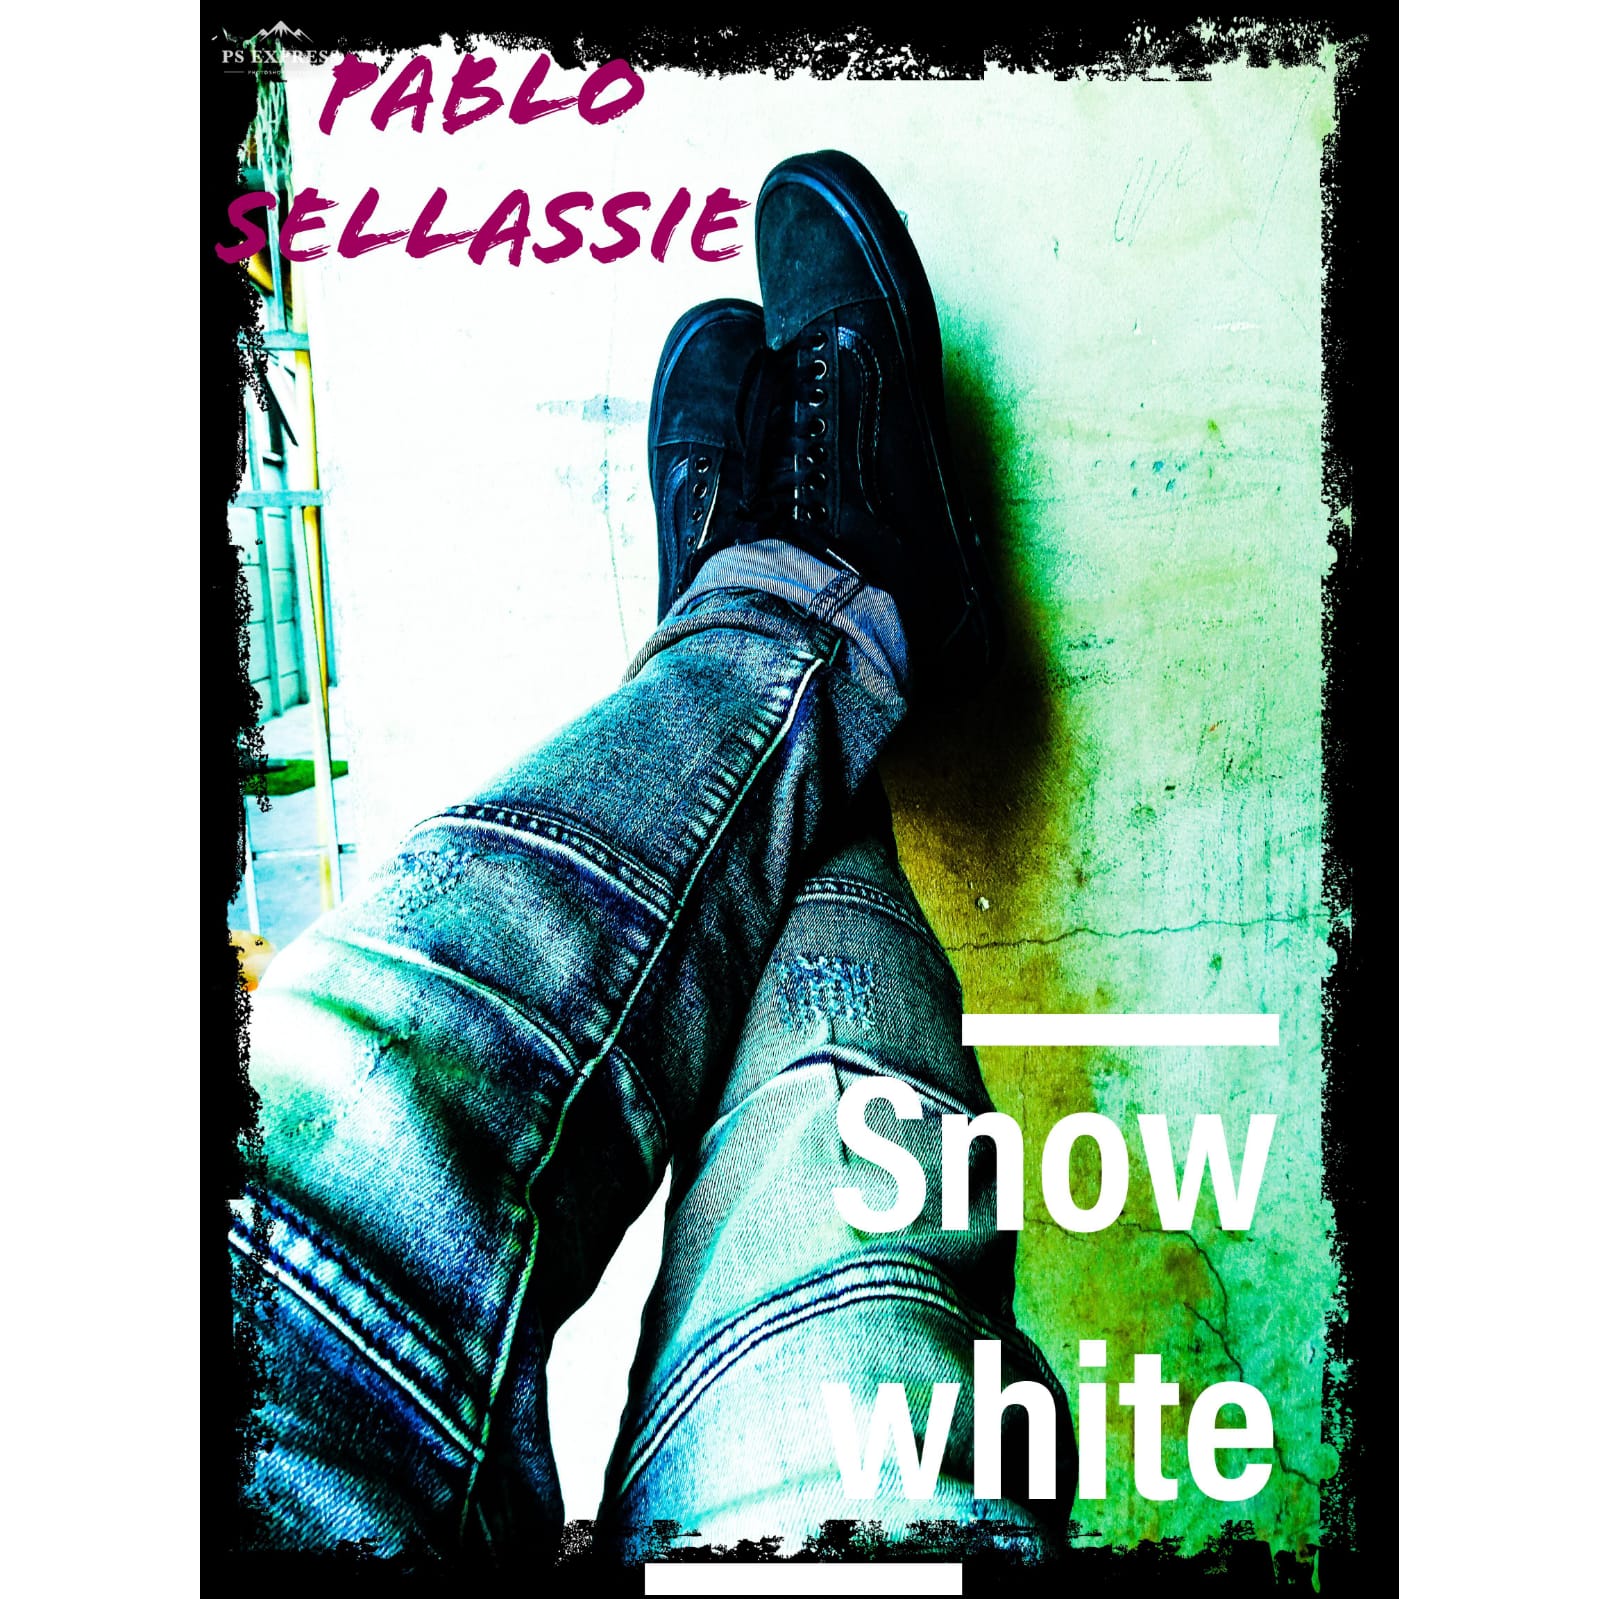 Pablo-sellasie-Snow-White-prod-by-BlackYard